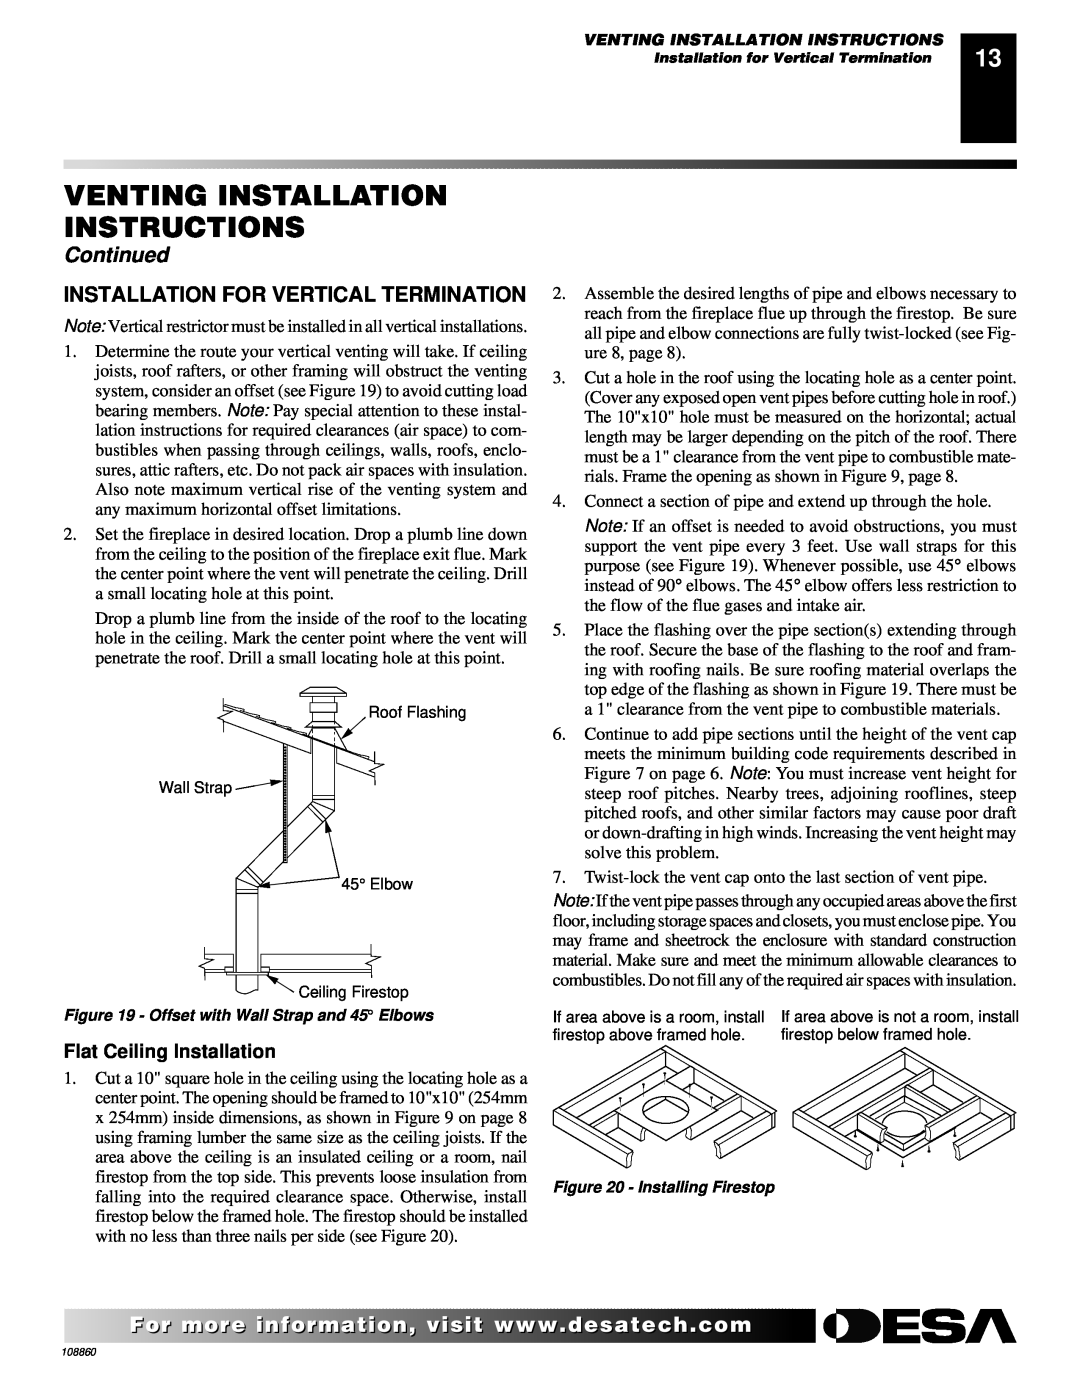 Desa (V)T36EP SERIES, (V)T32EP, V)T32EN Venting Installation Instructions, Continued, Installation For Vertical Termination 